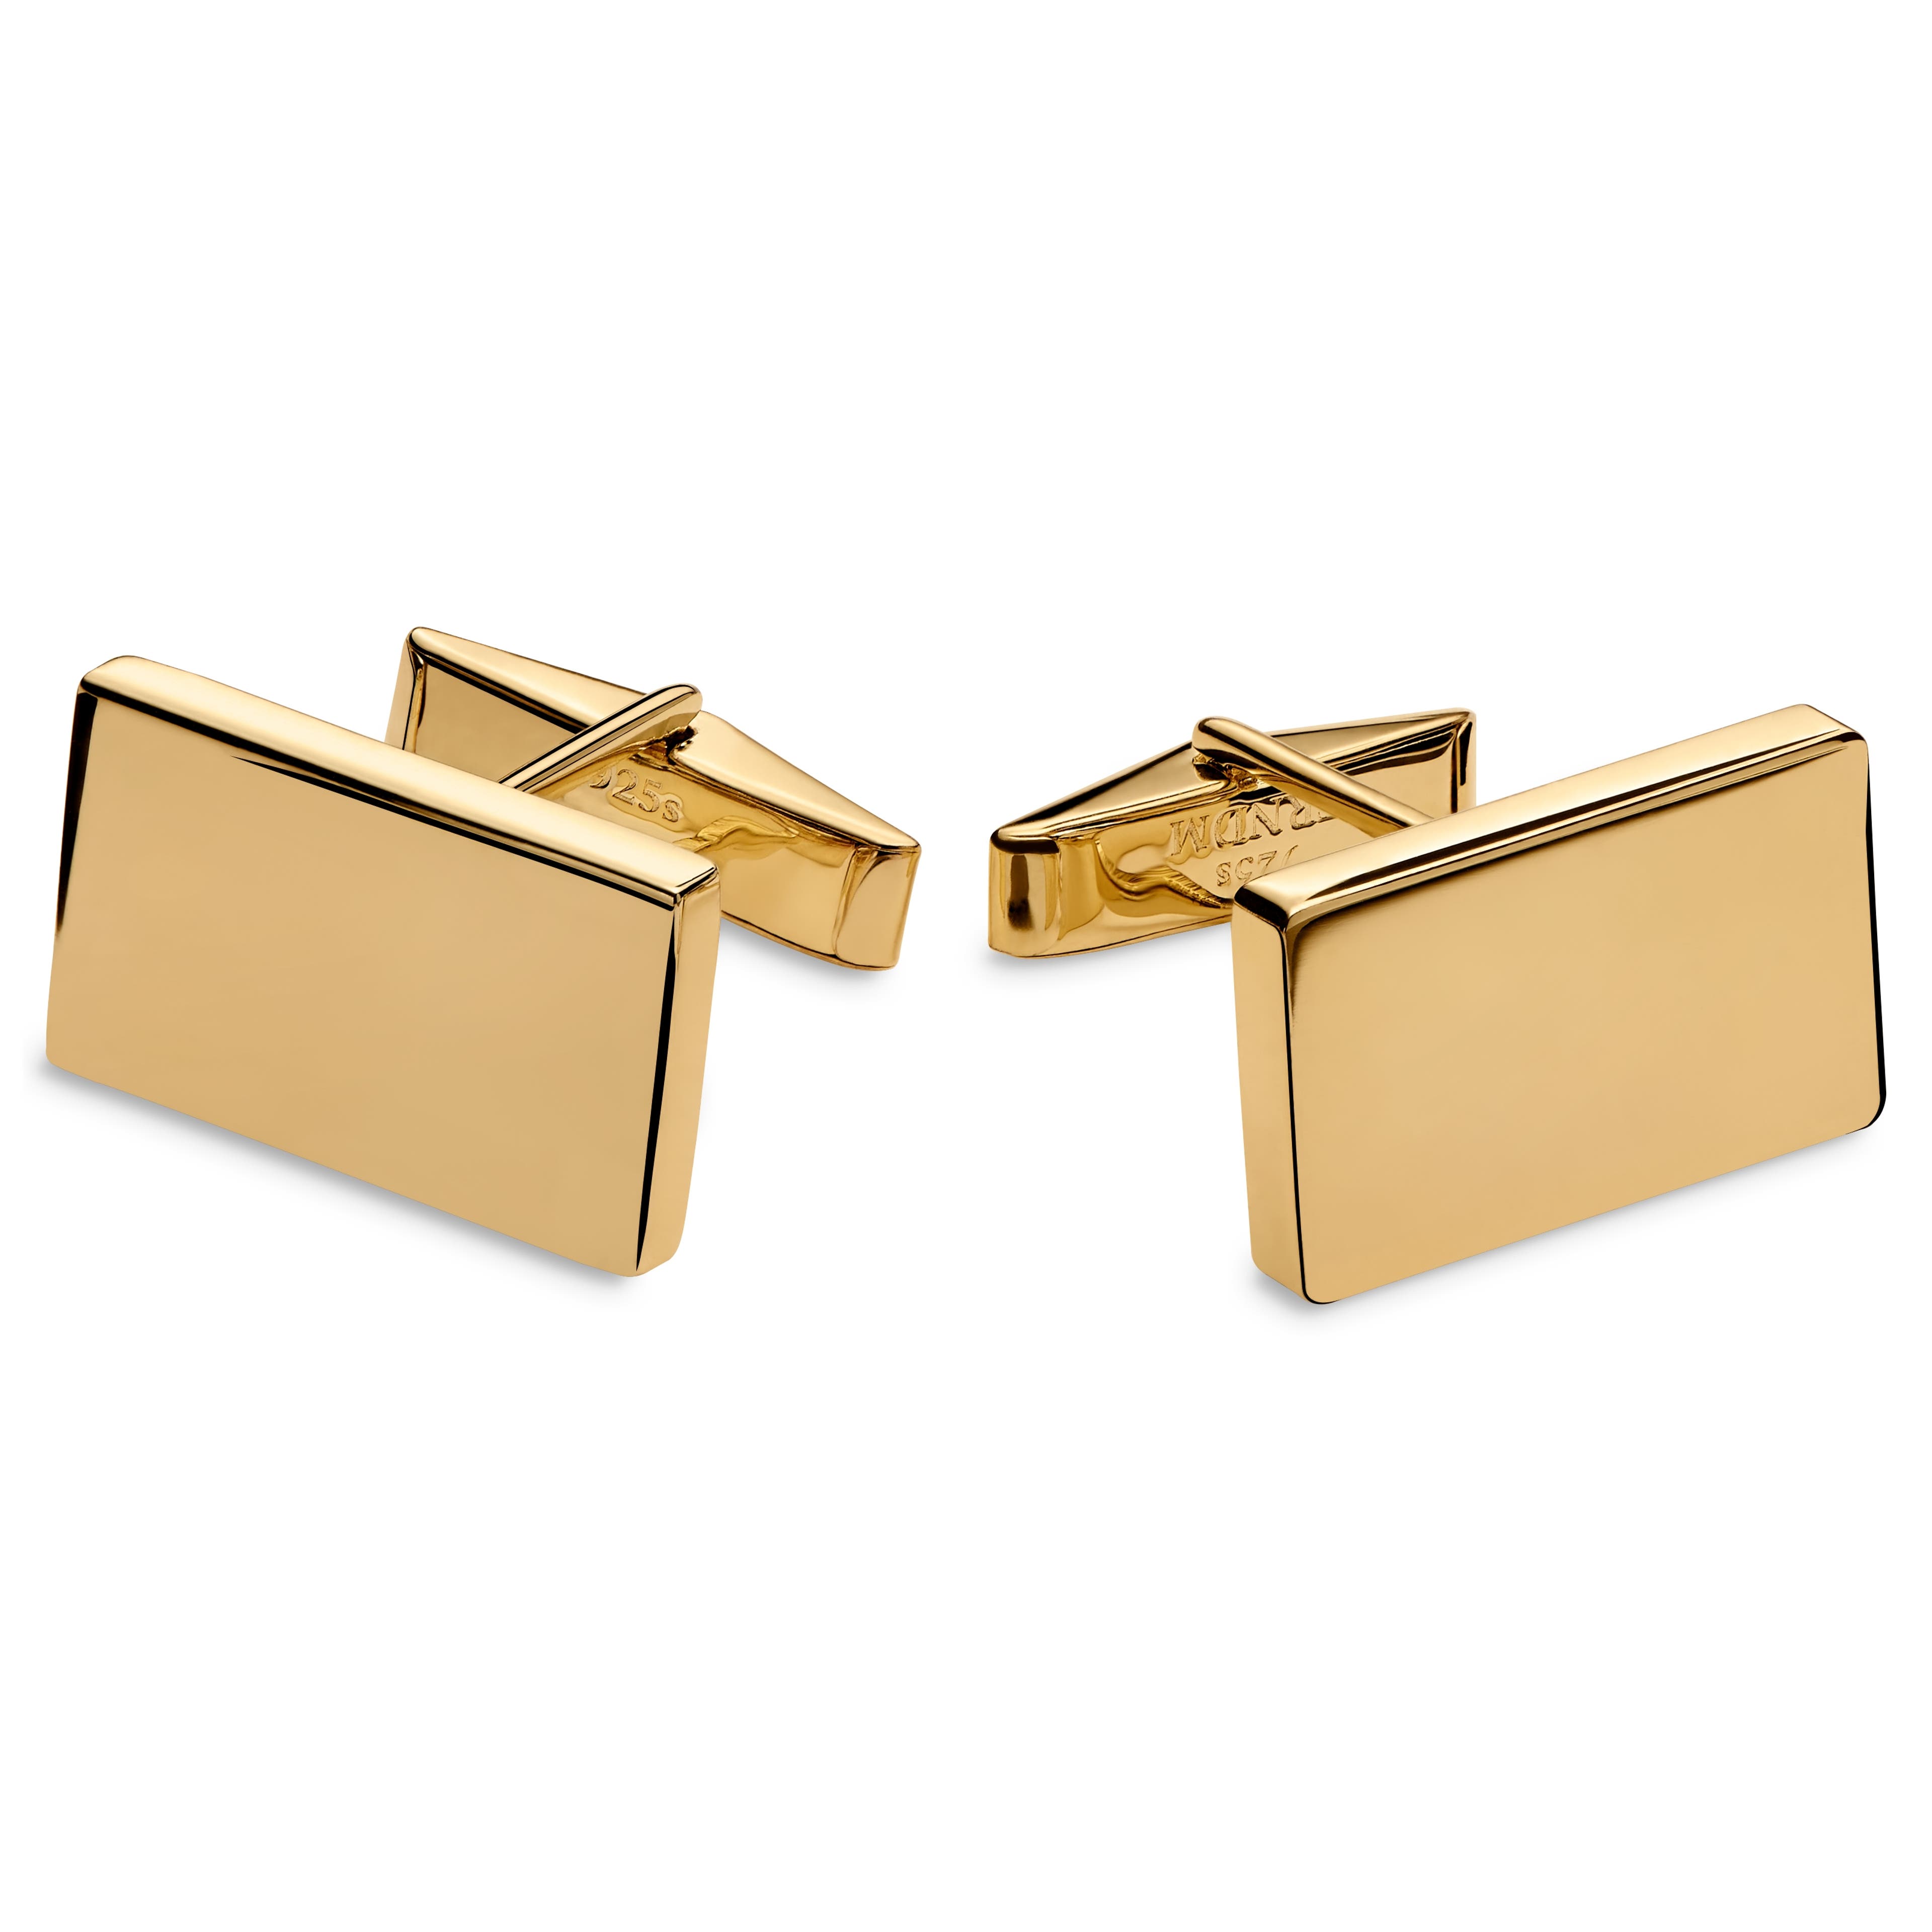 Rectangle Gold 925s Classic Cufflinks